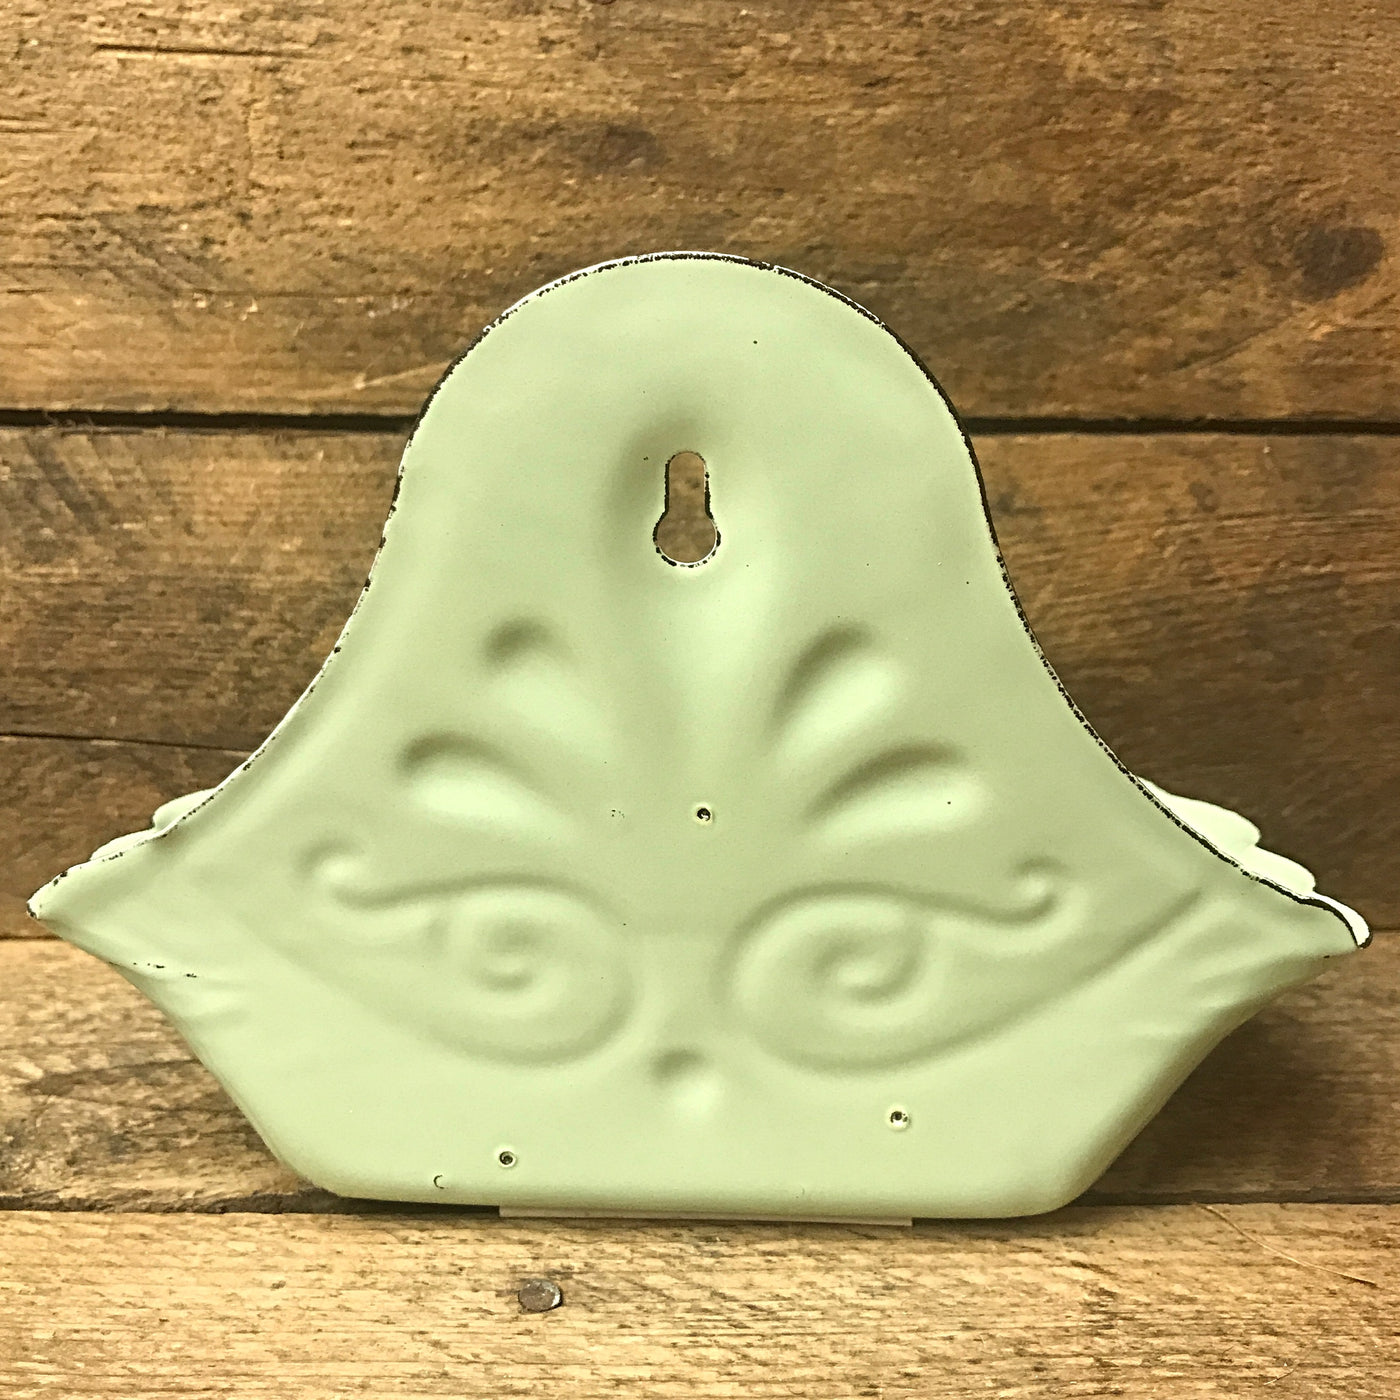 Retro Green Enamel Metal Soap Dish